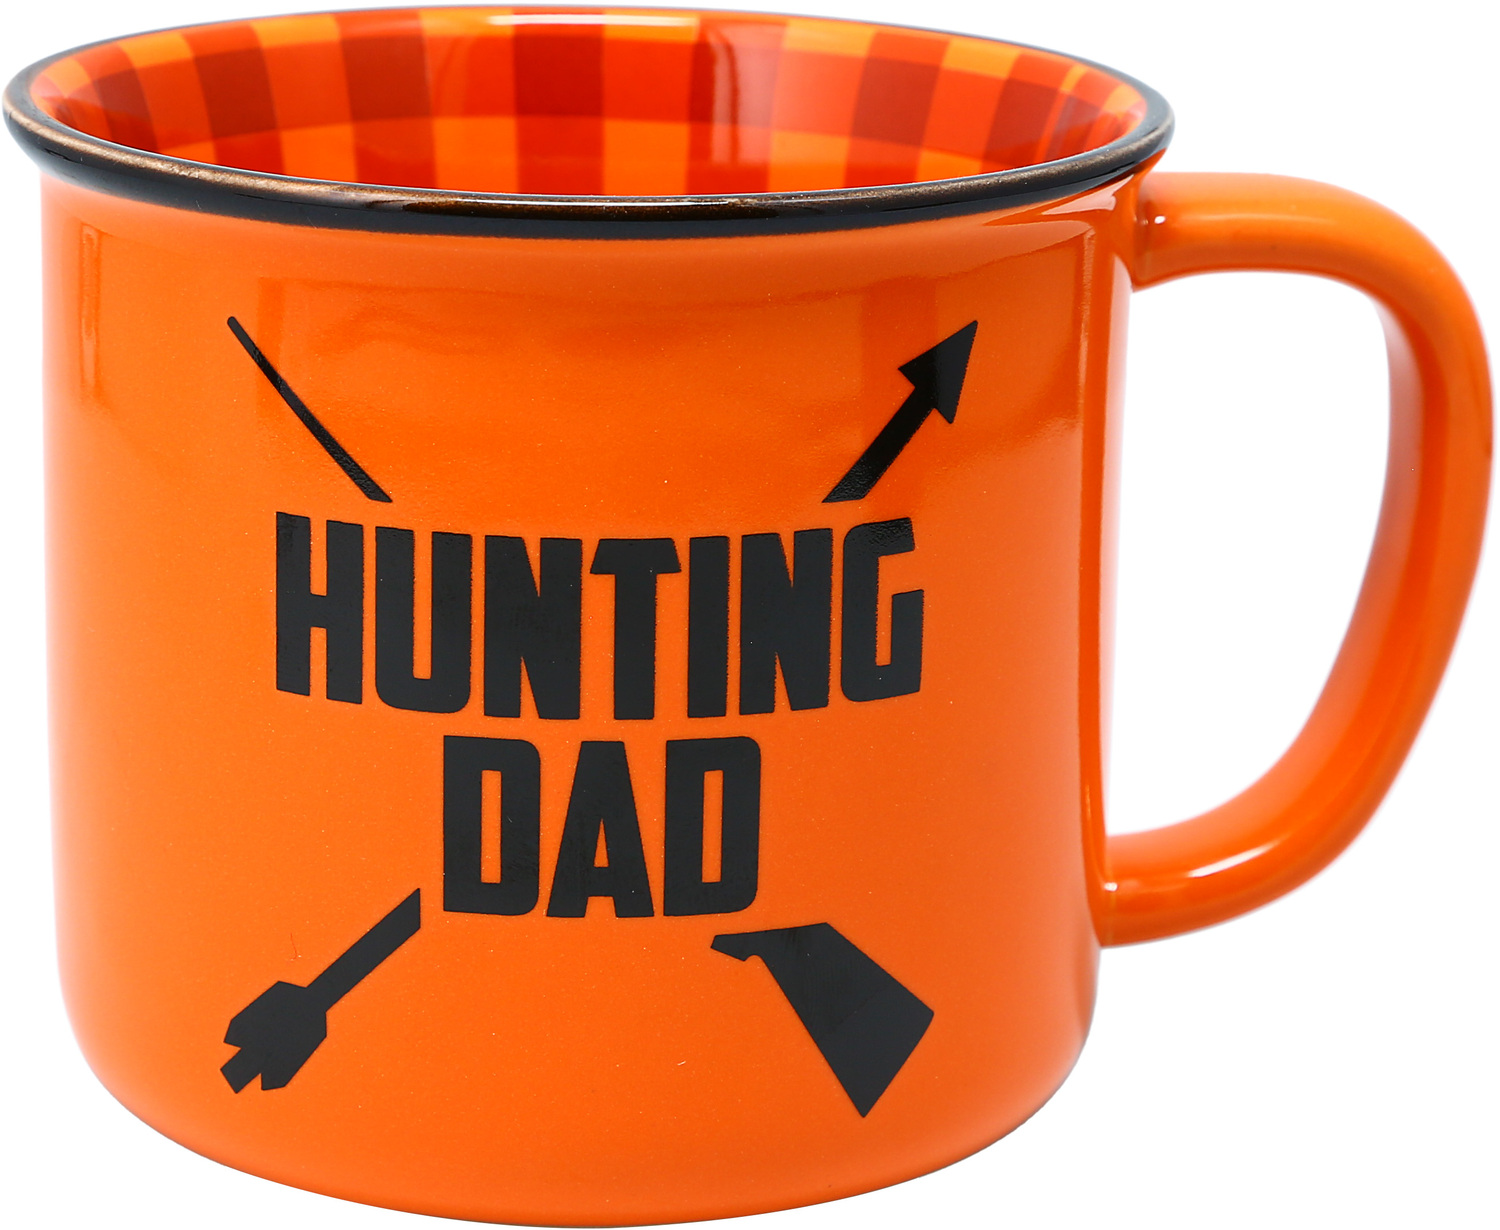 Hunting Dad by Man Out - Hunting Dad - 18 oz Mug